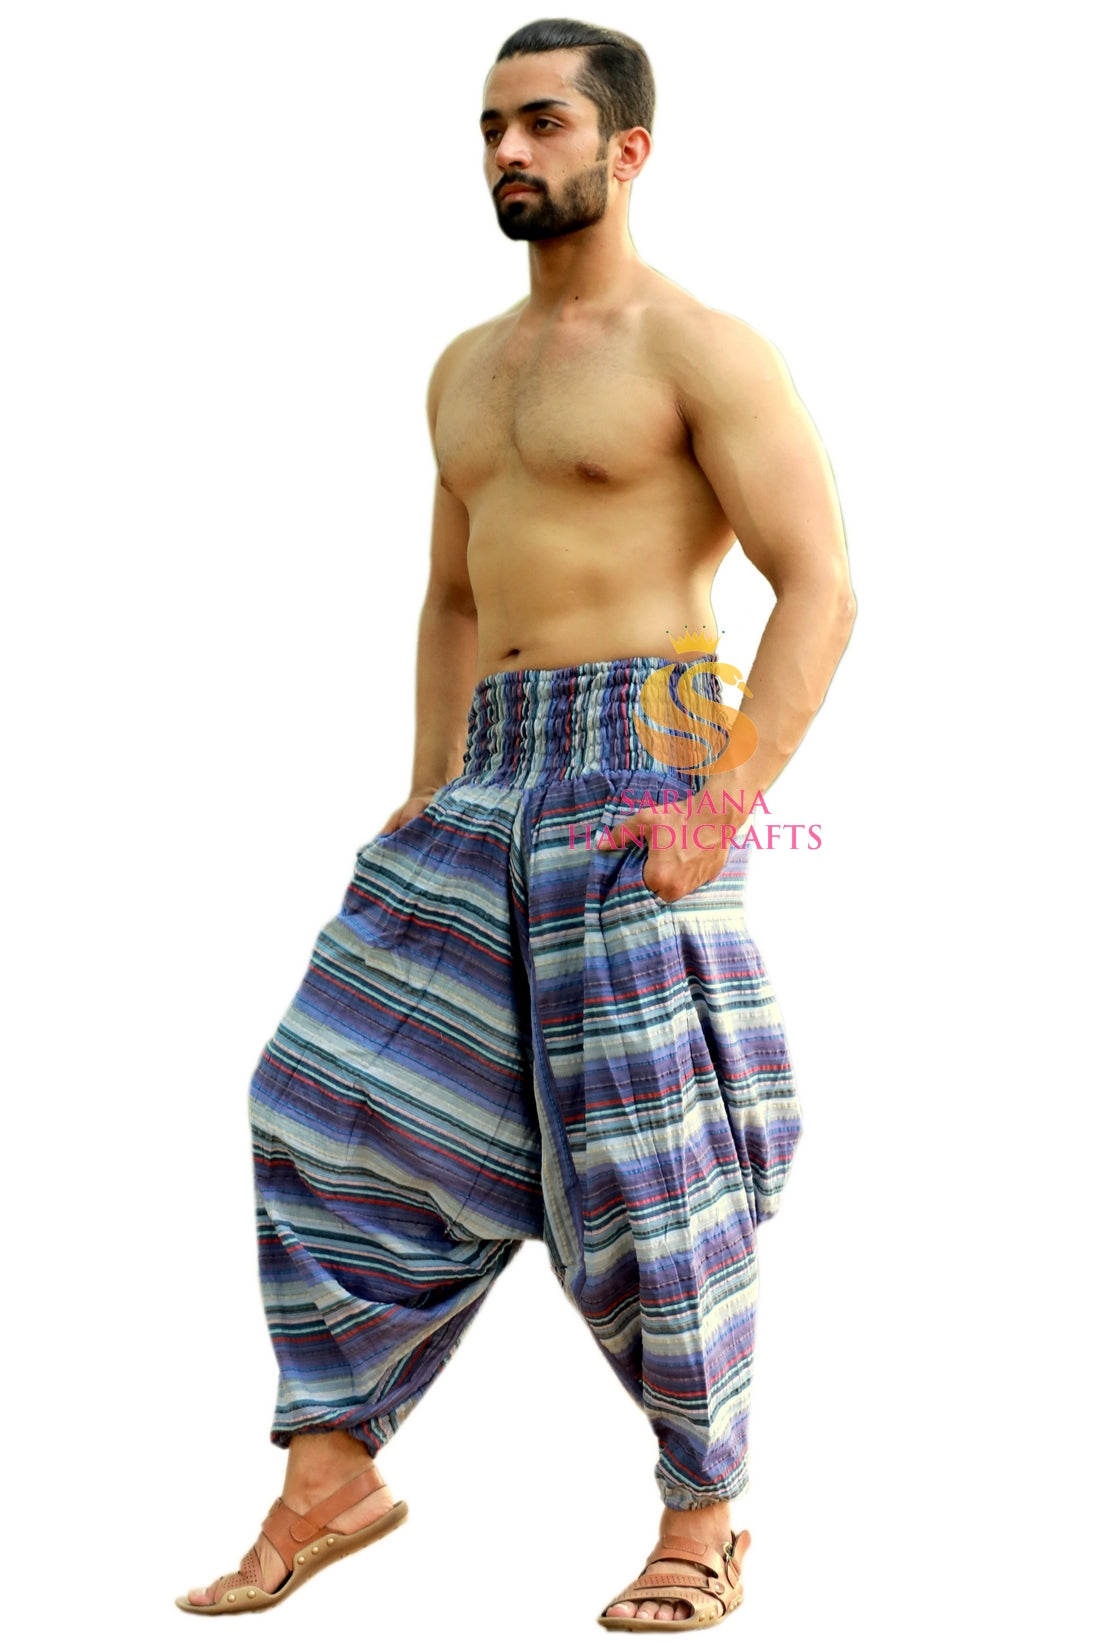 Sarjana Handicrafts - Men Women Cotton Solid Harem Pants Yoga